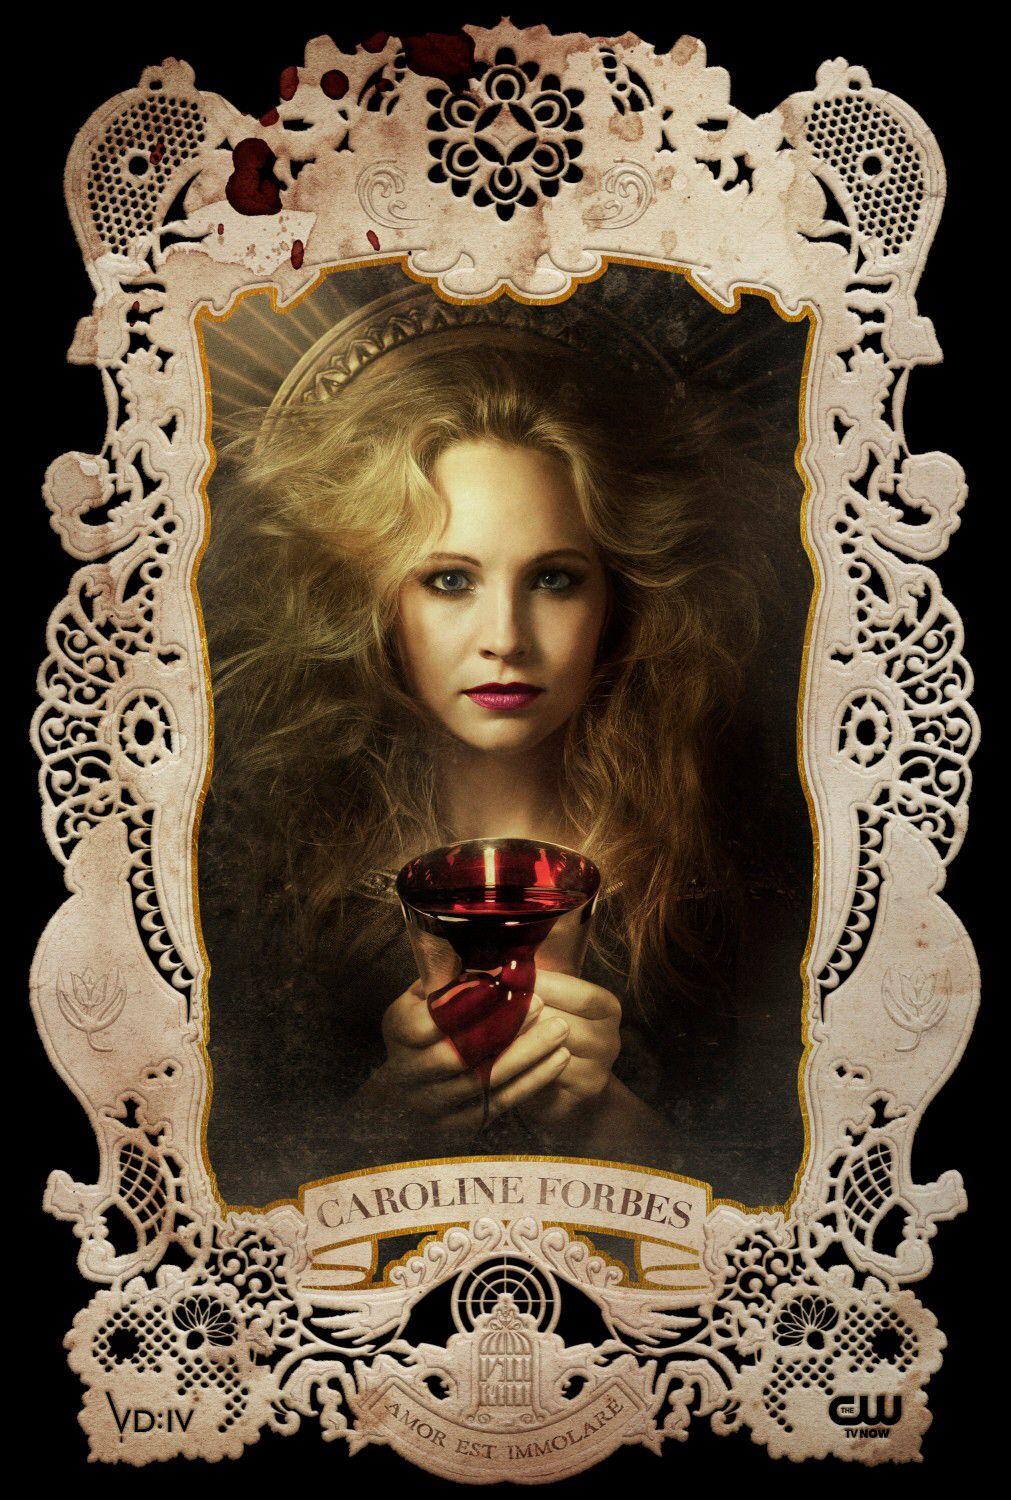 Caroline Forbes, Wallpaper. Vampires People & Stuff